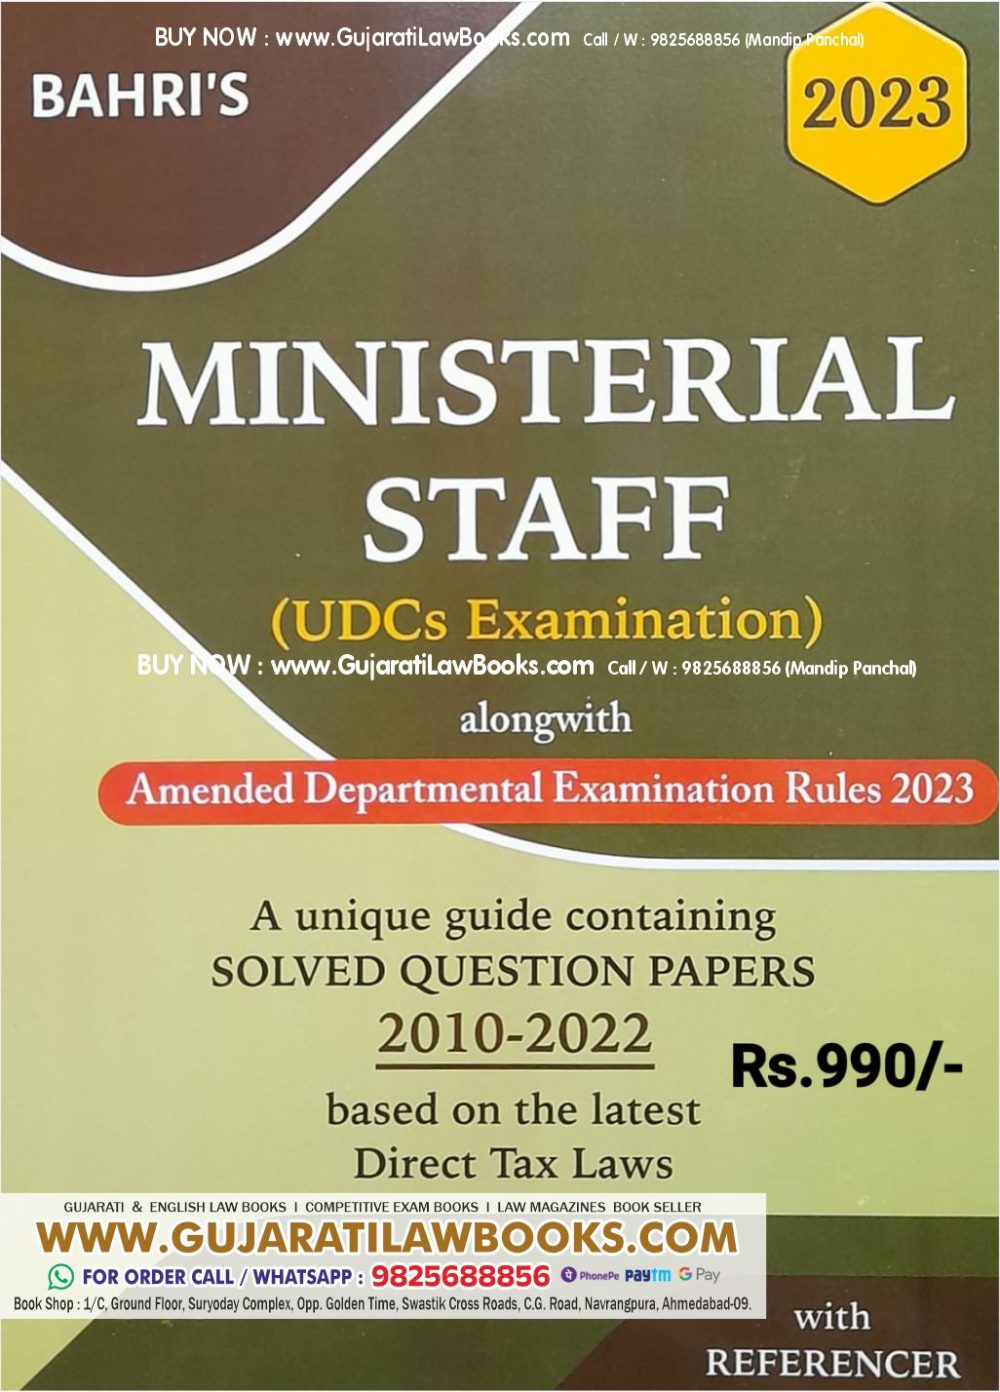 Bahri's MINISTERIAL STAFF (UDCs Examination) 2023